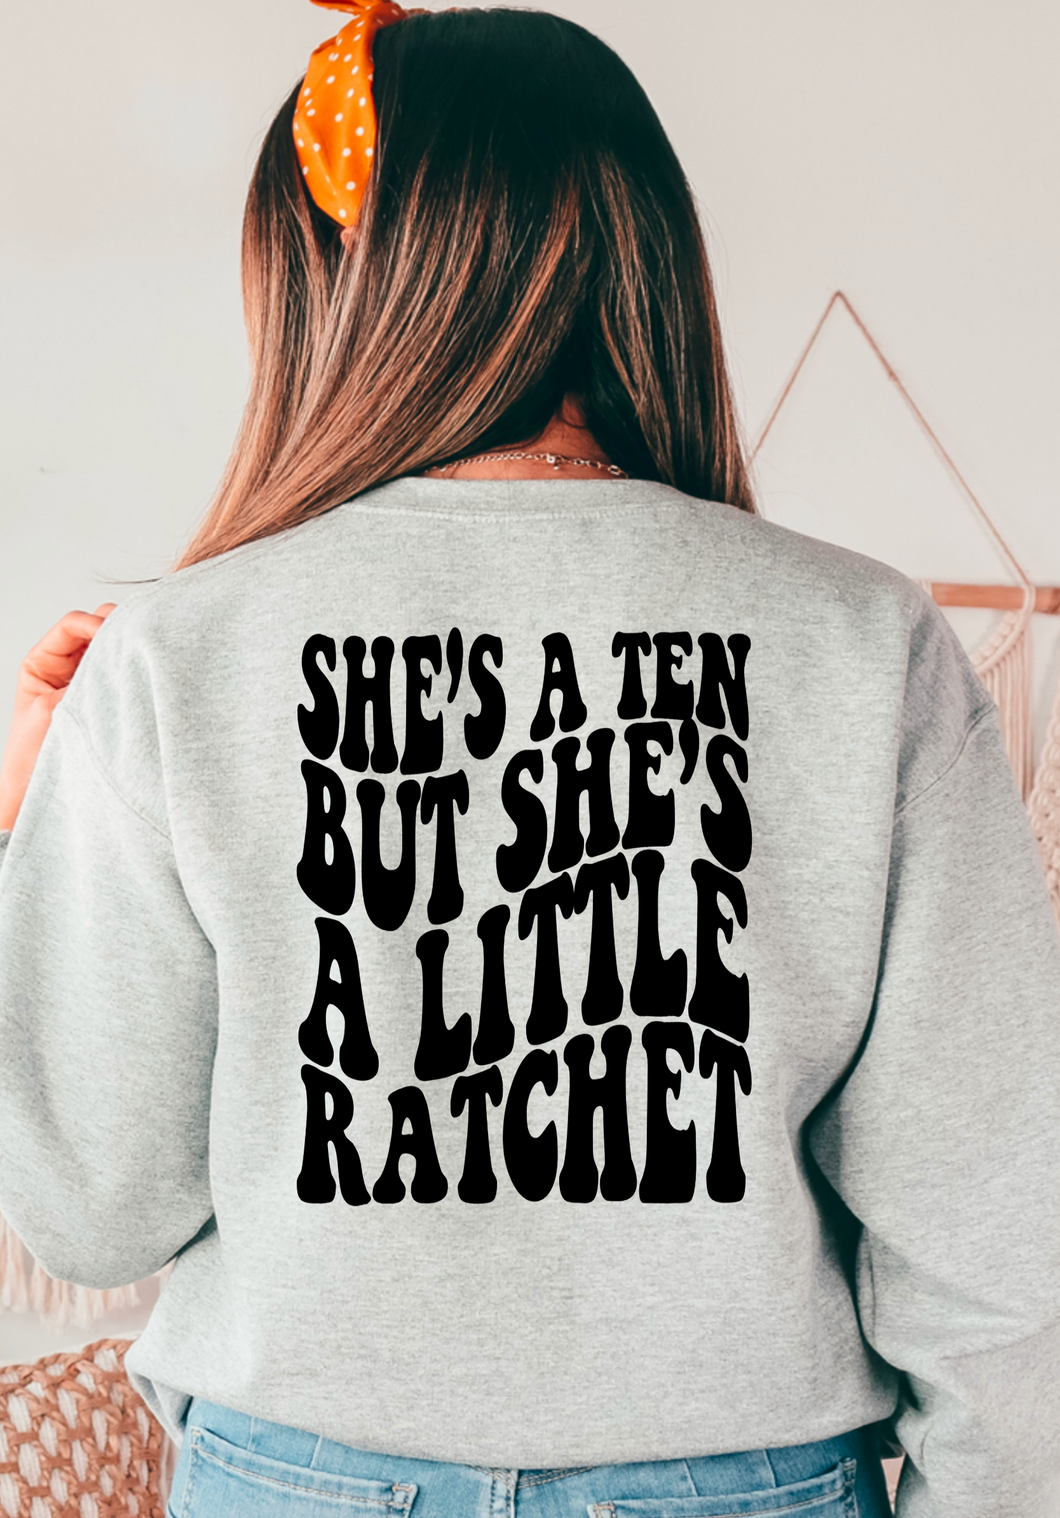 She’s a 10 but she’s a little ratchet